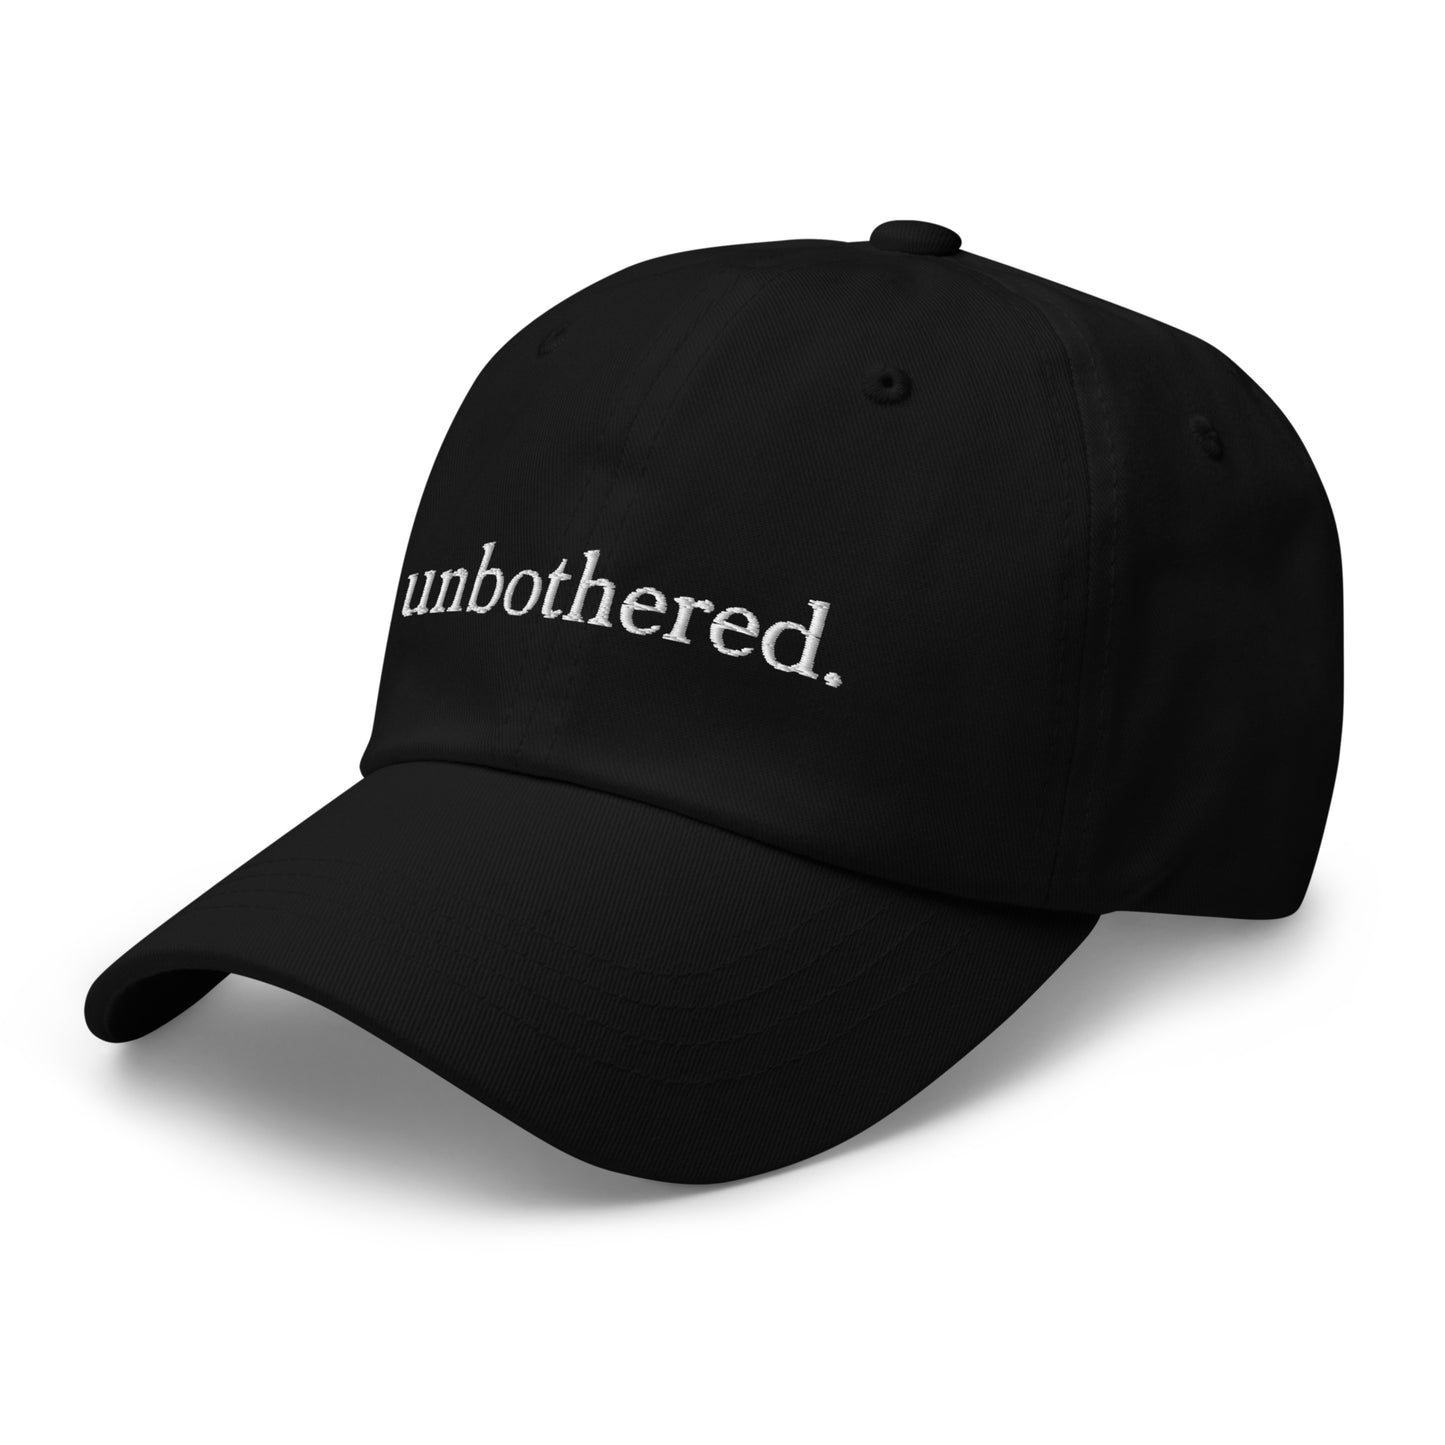 POTSH Classic Black "UNBOTHERED" Hat